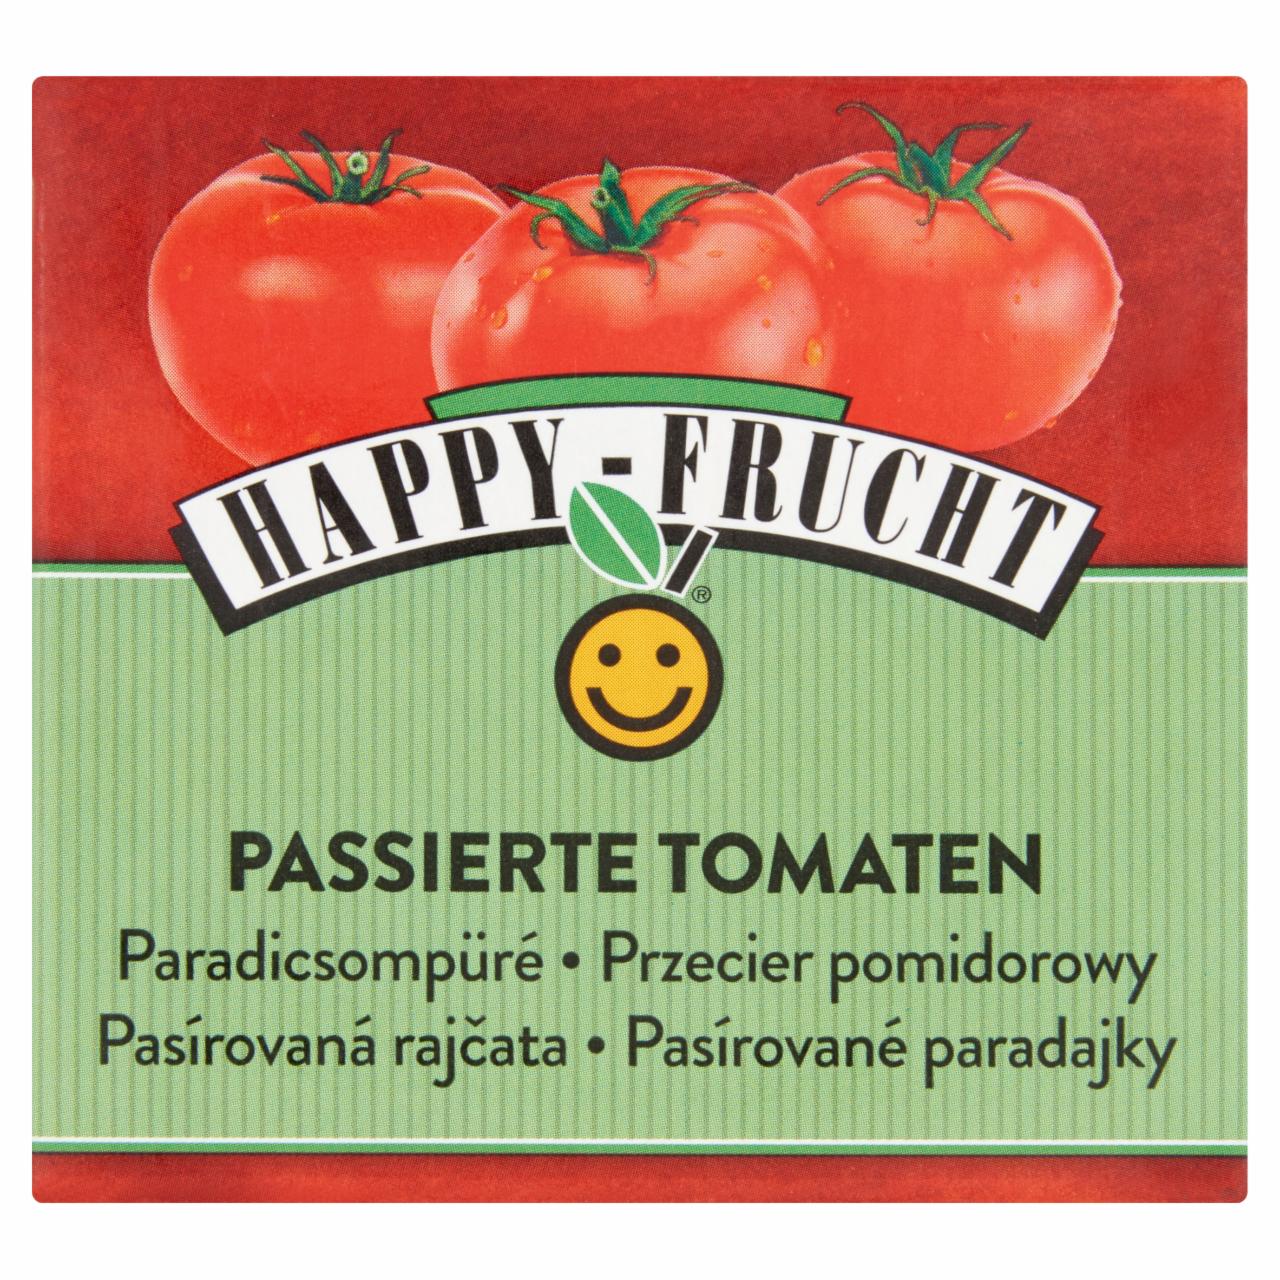 Képek - Happy Frucht paradicsompüré 500 g